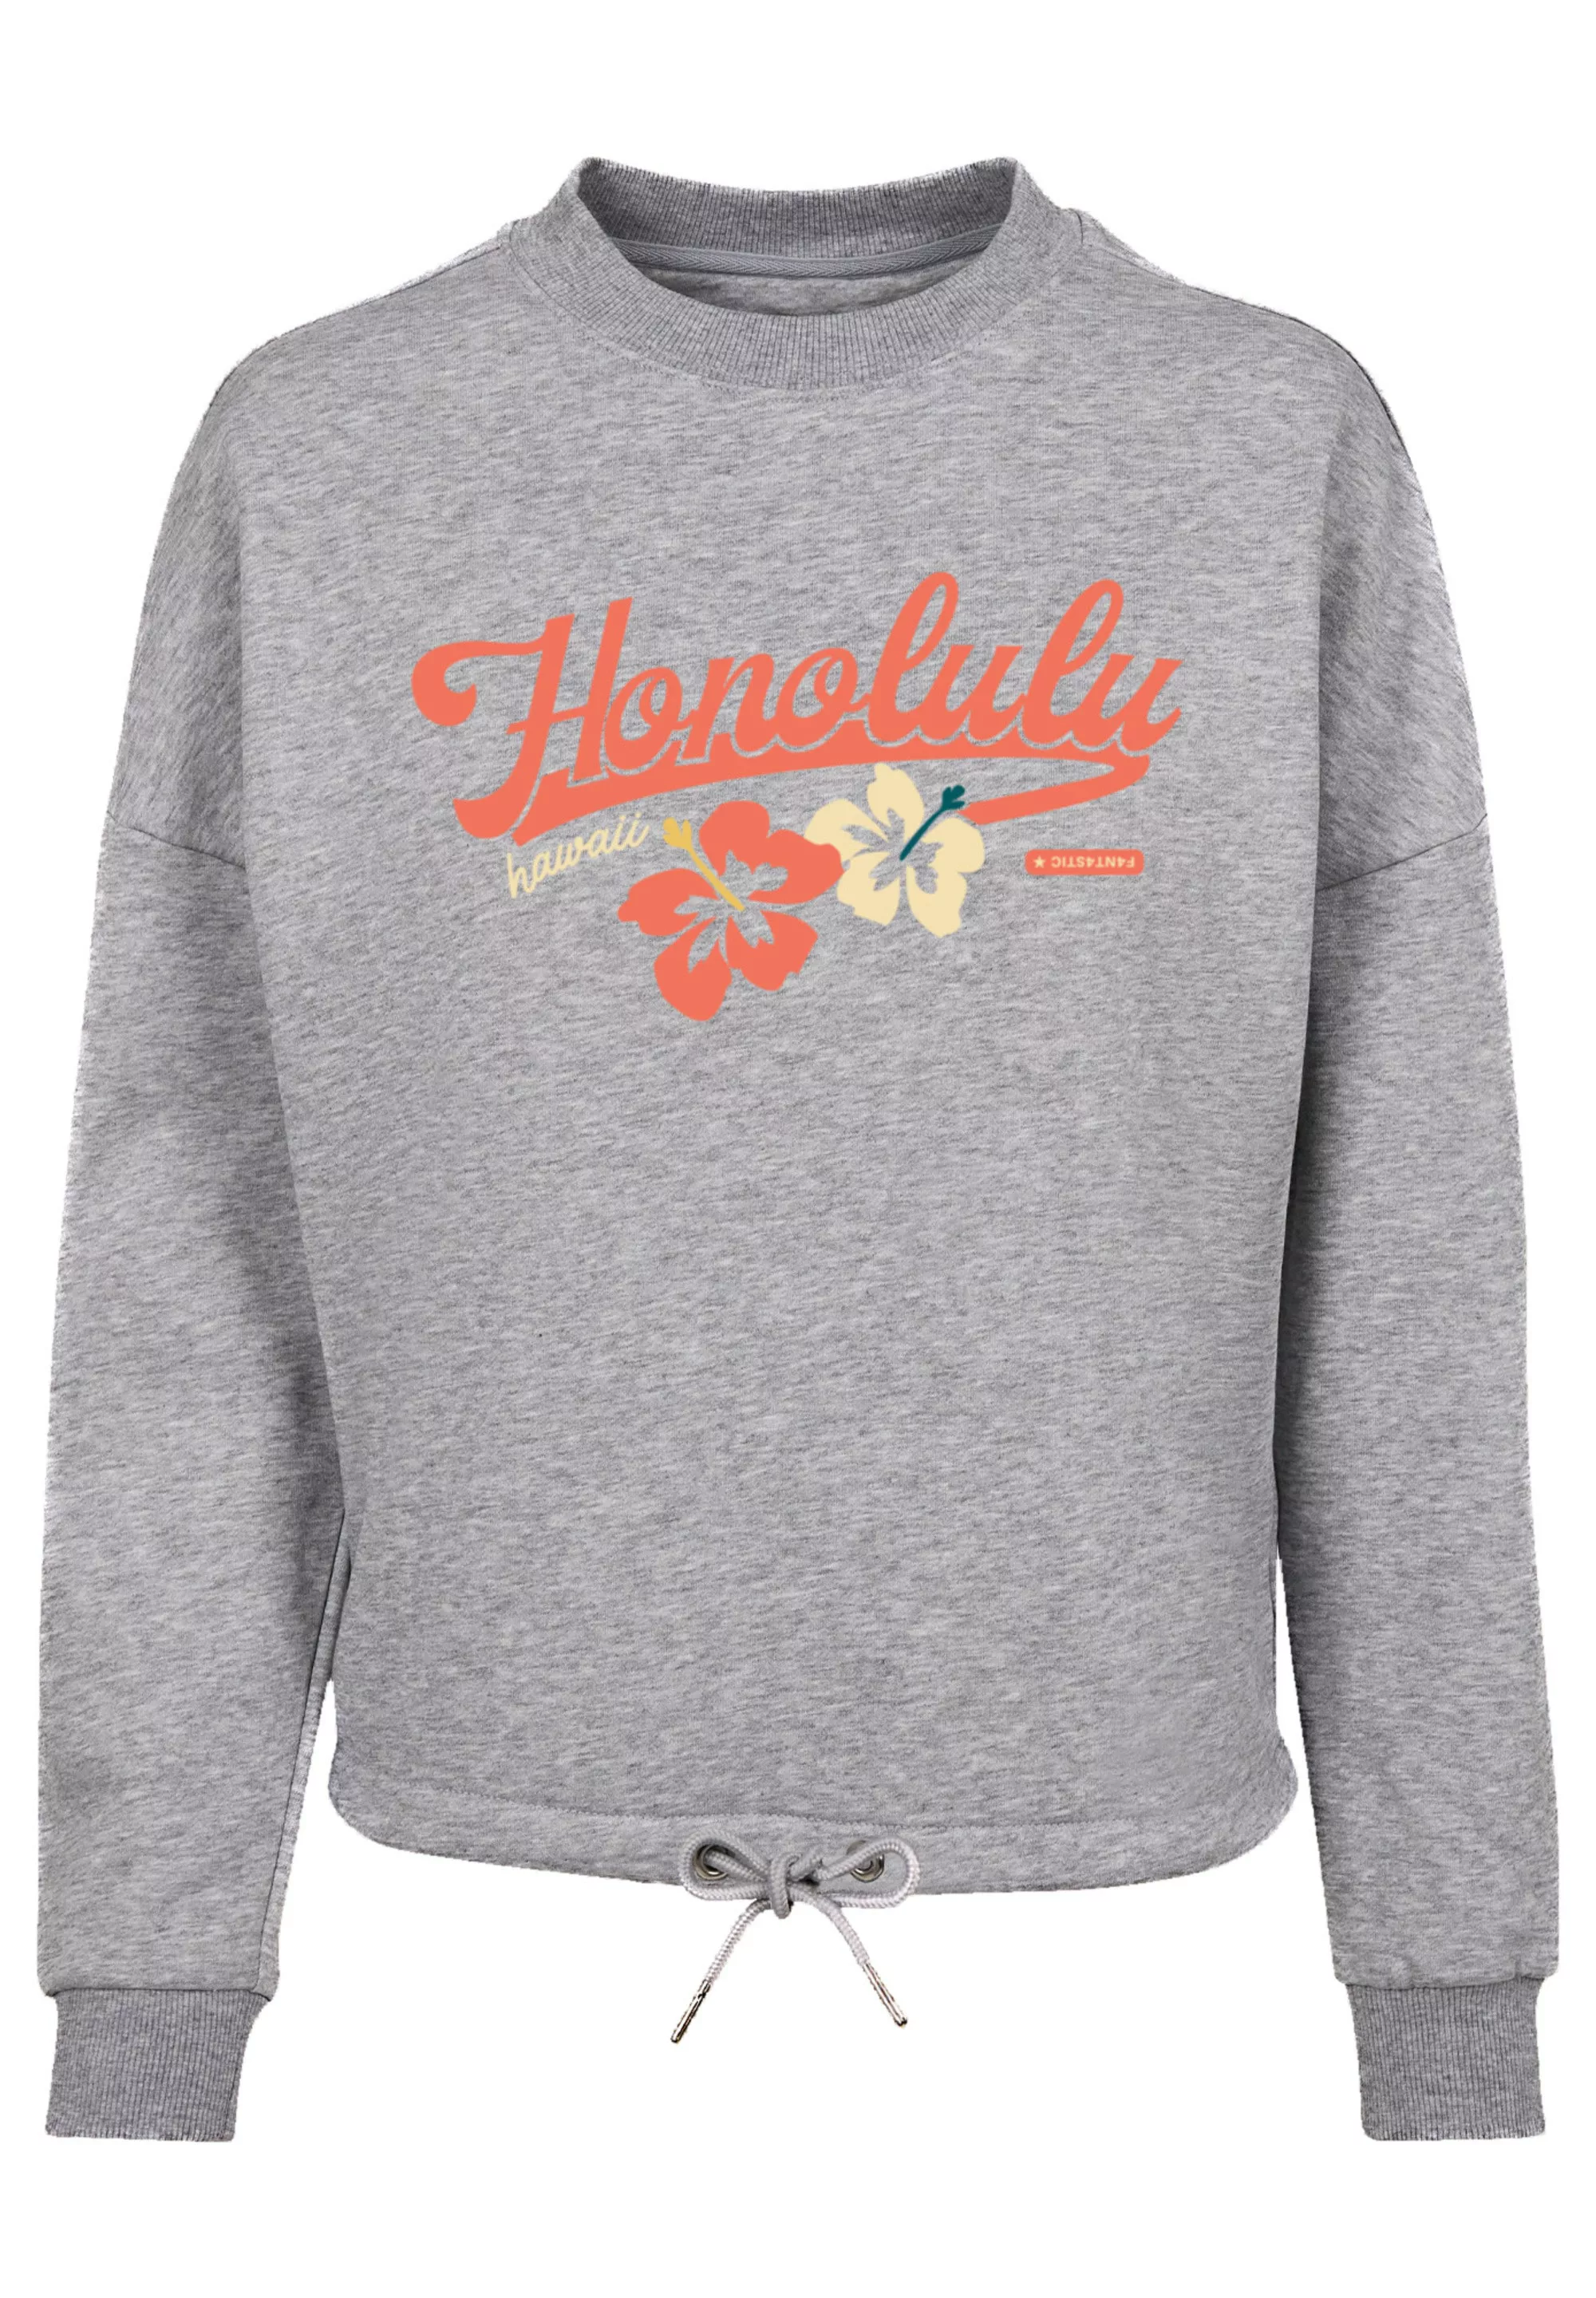 F4NT4STIC Sweatshirt "Honolulu", Print günstig online kaufen